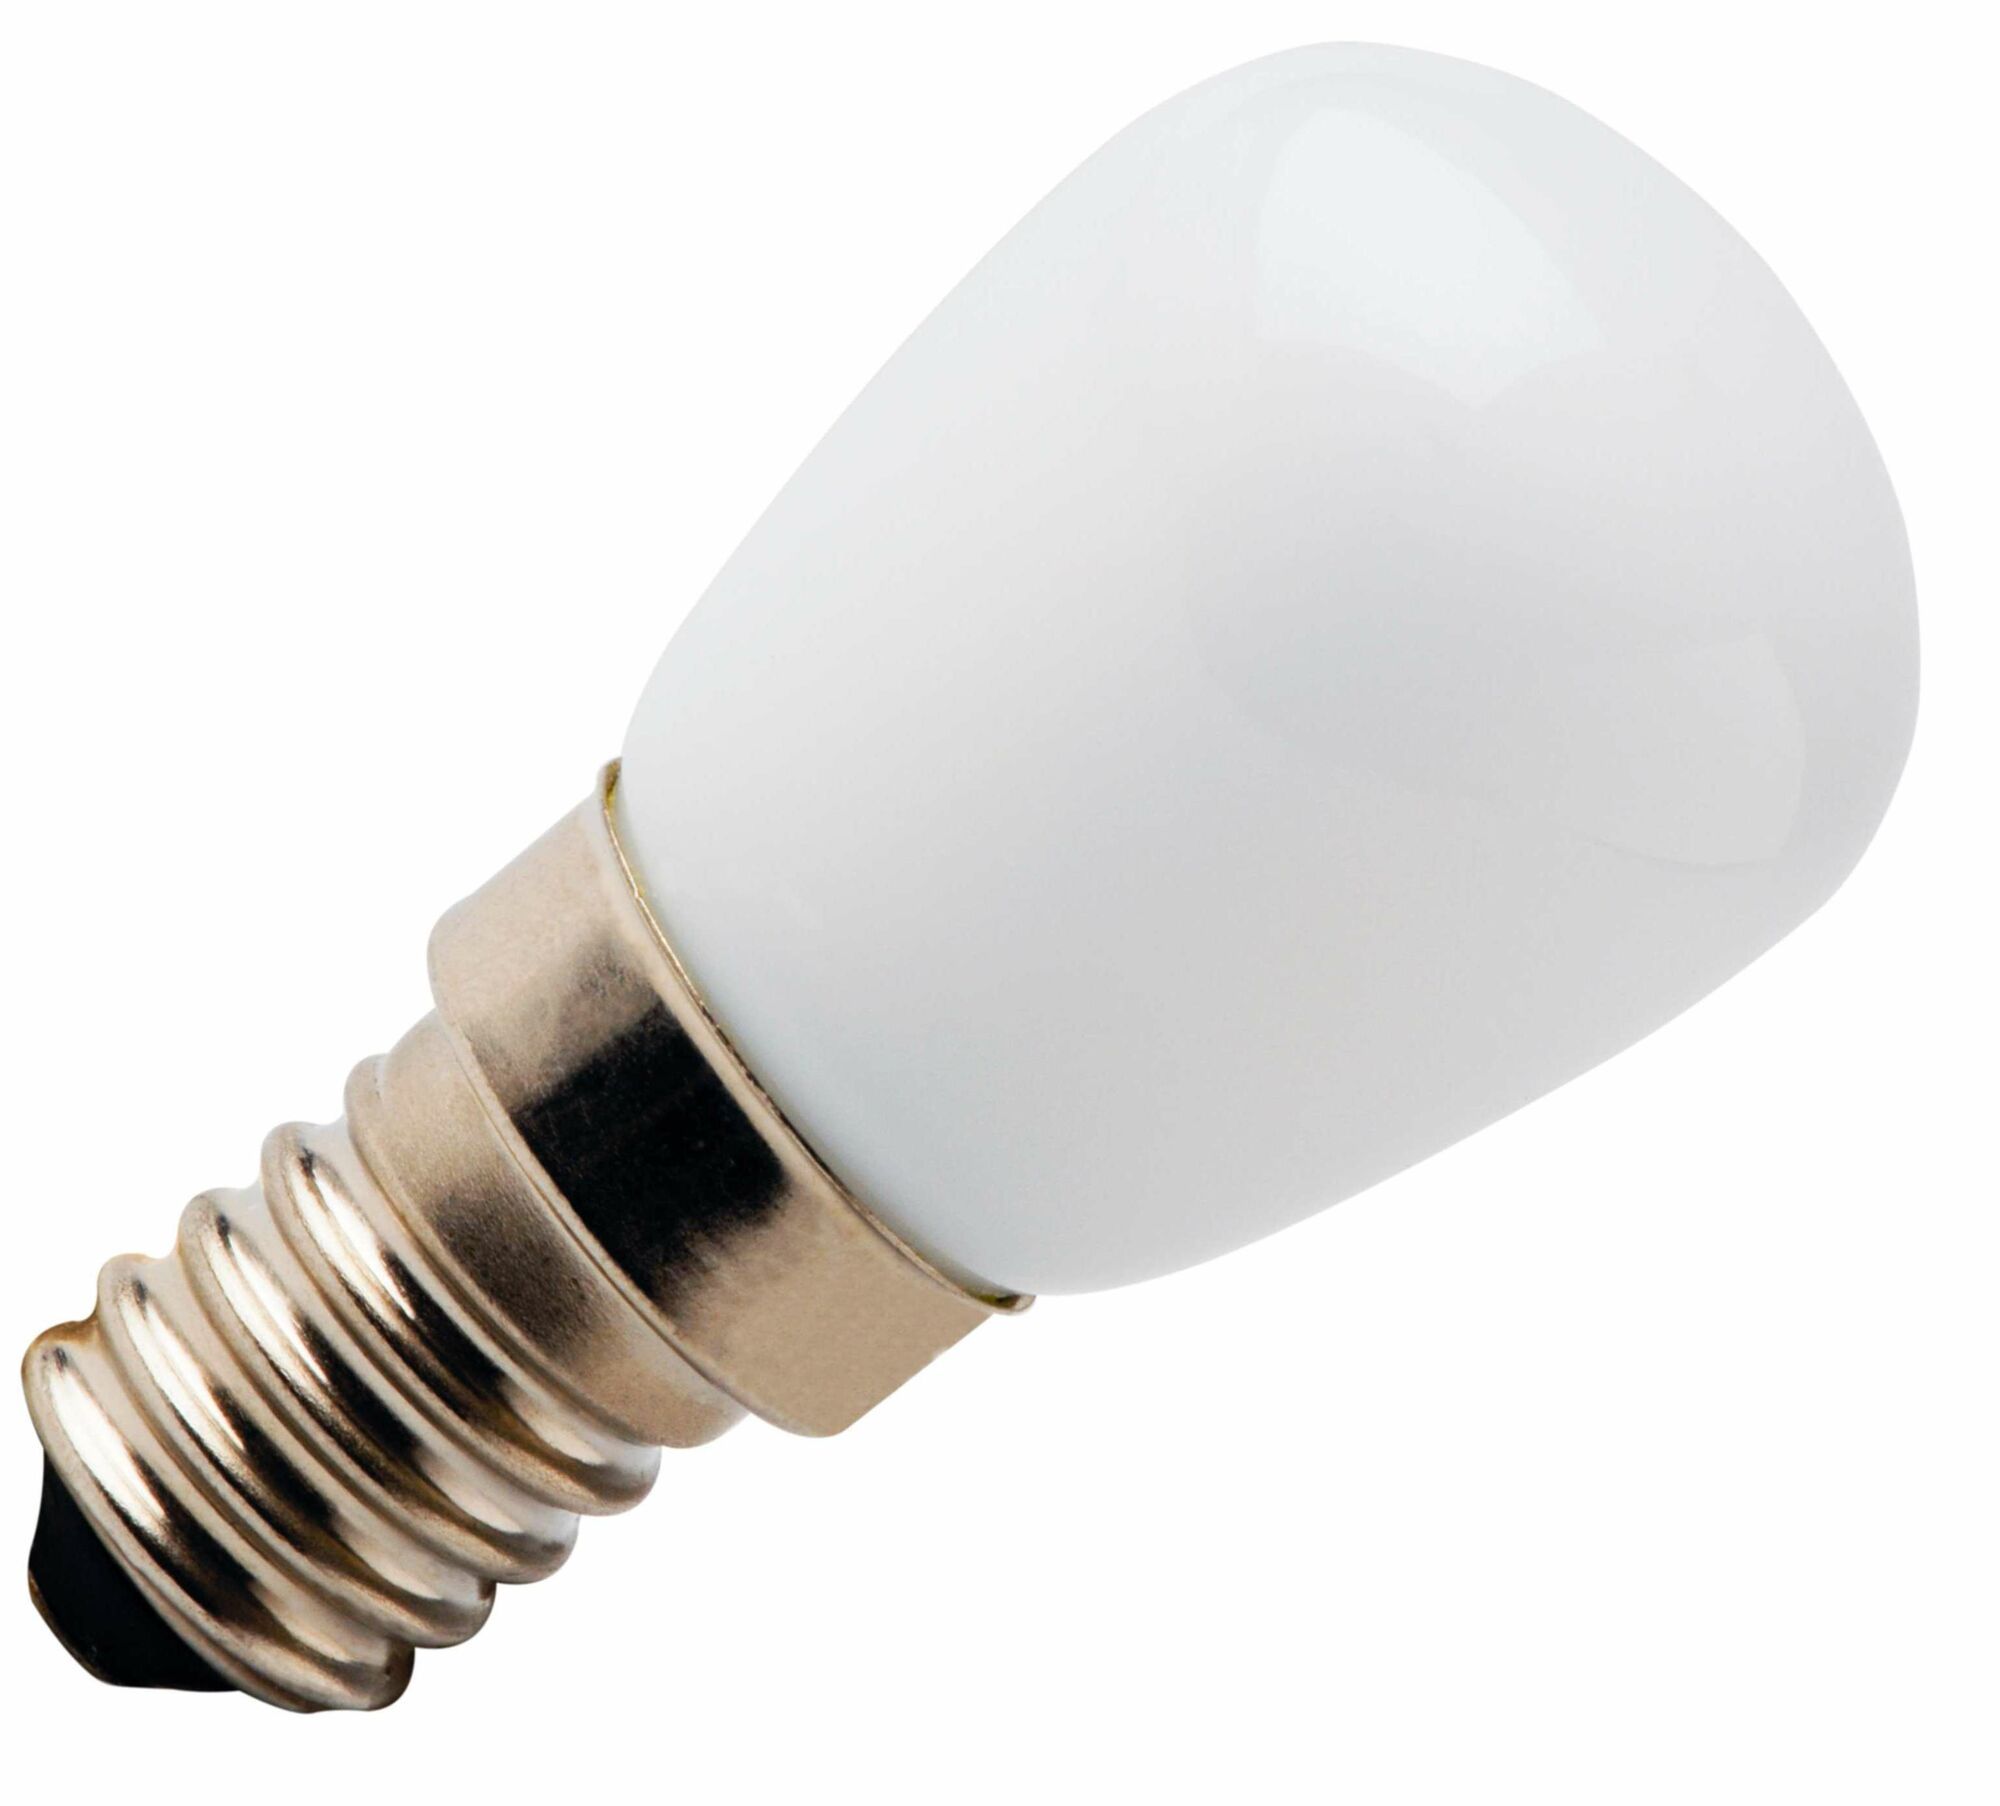 Bailey | LED Buislamp | Kleine fitting E14  | 1W